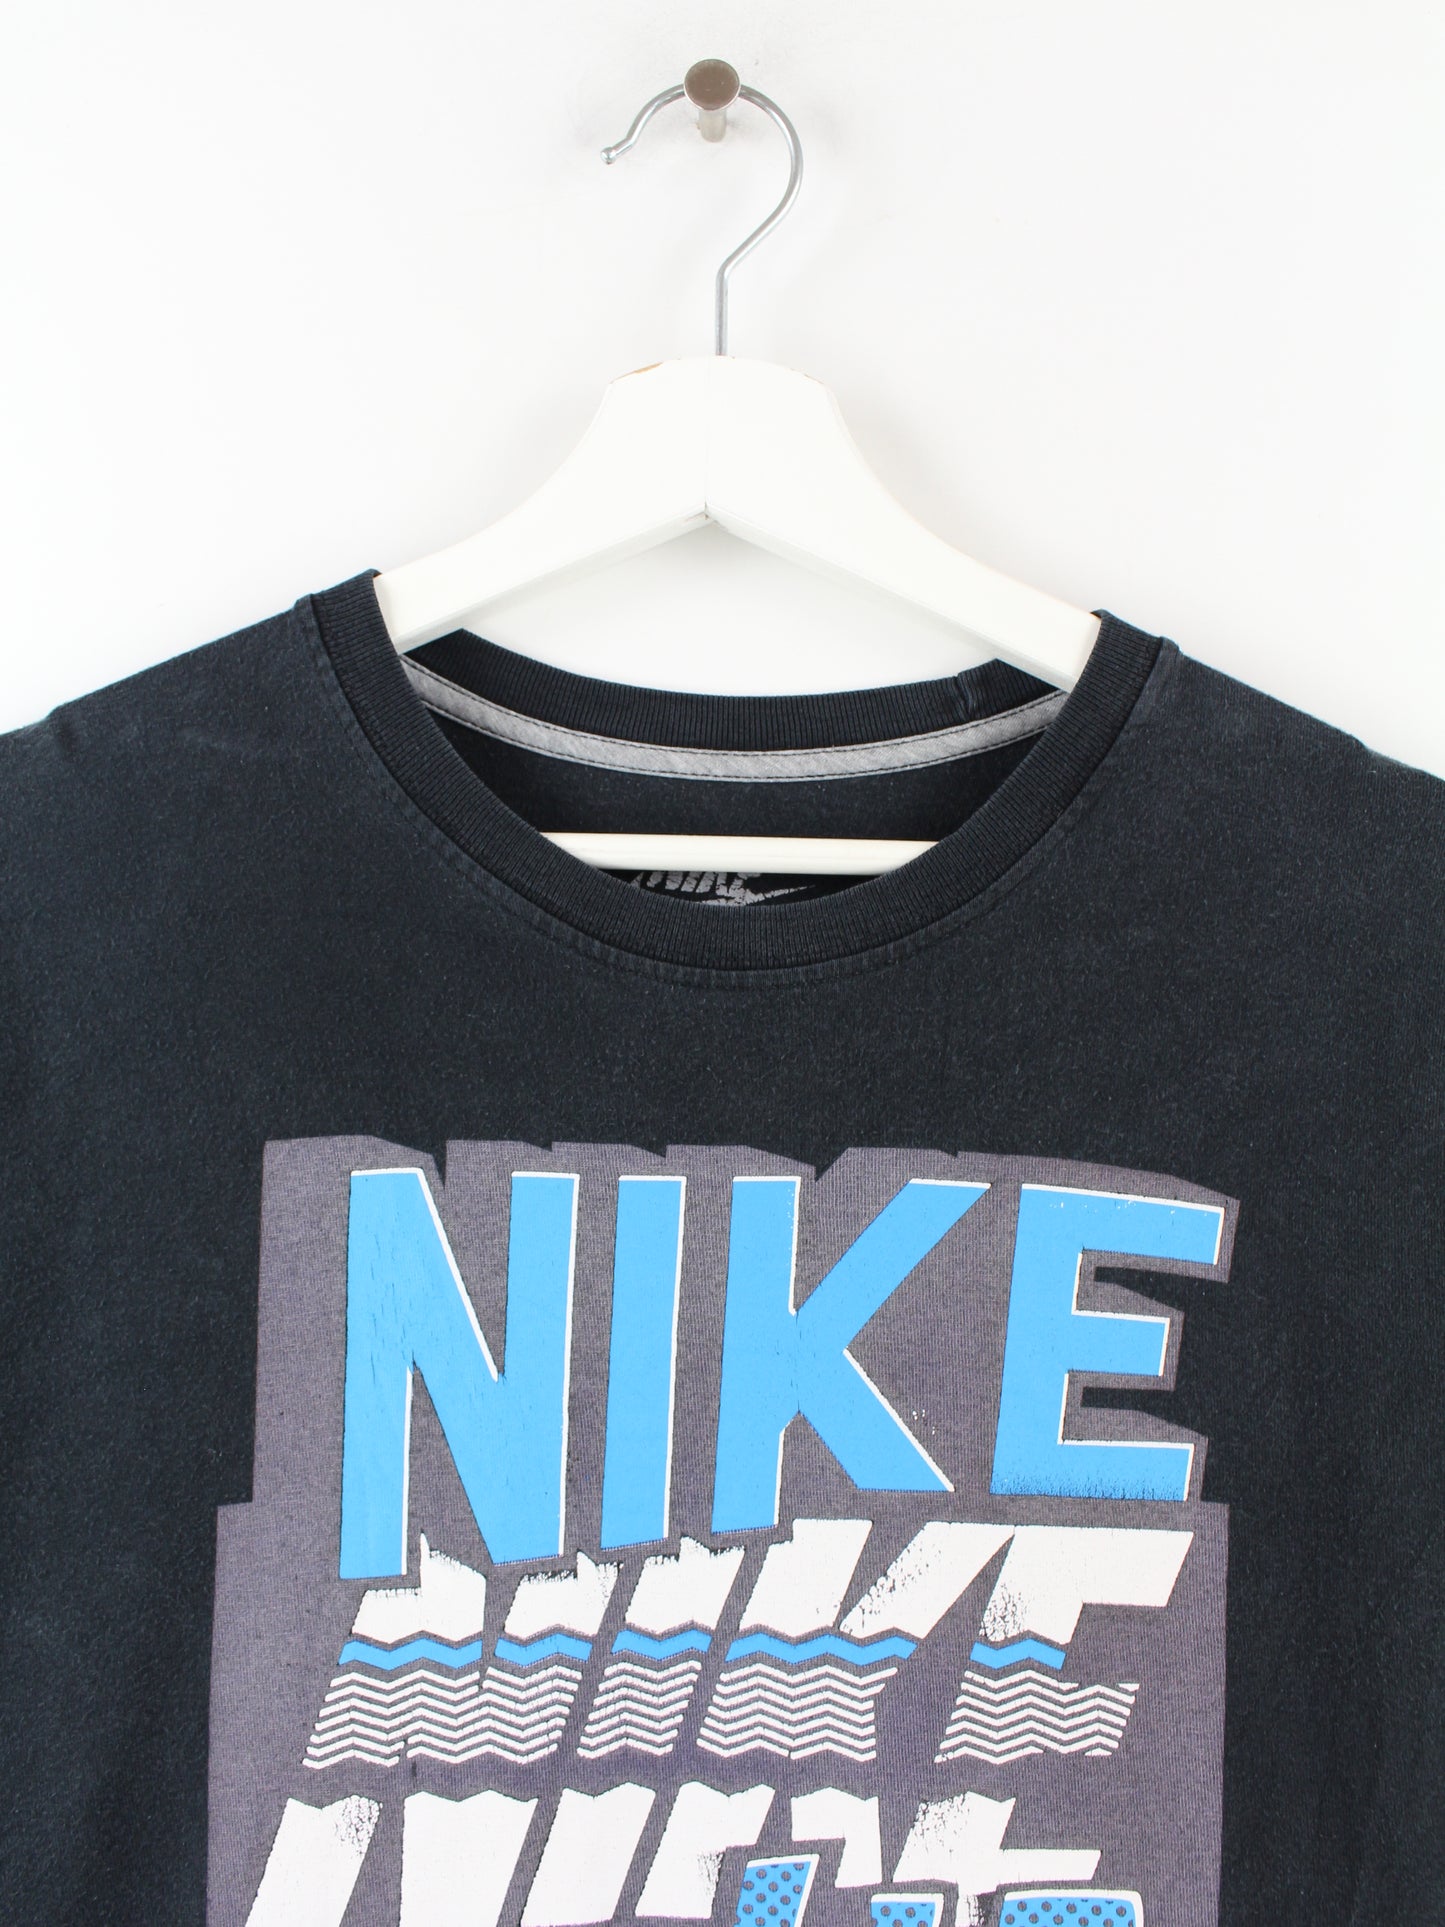 Nike Print T-Shirt Black M